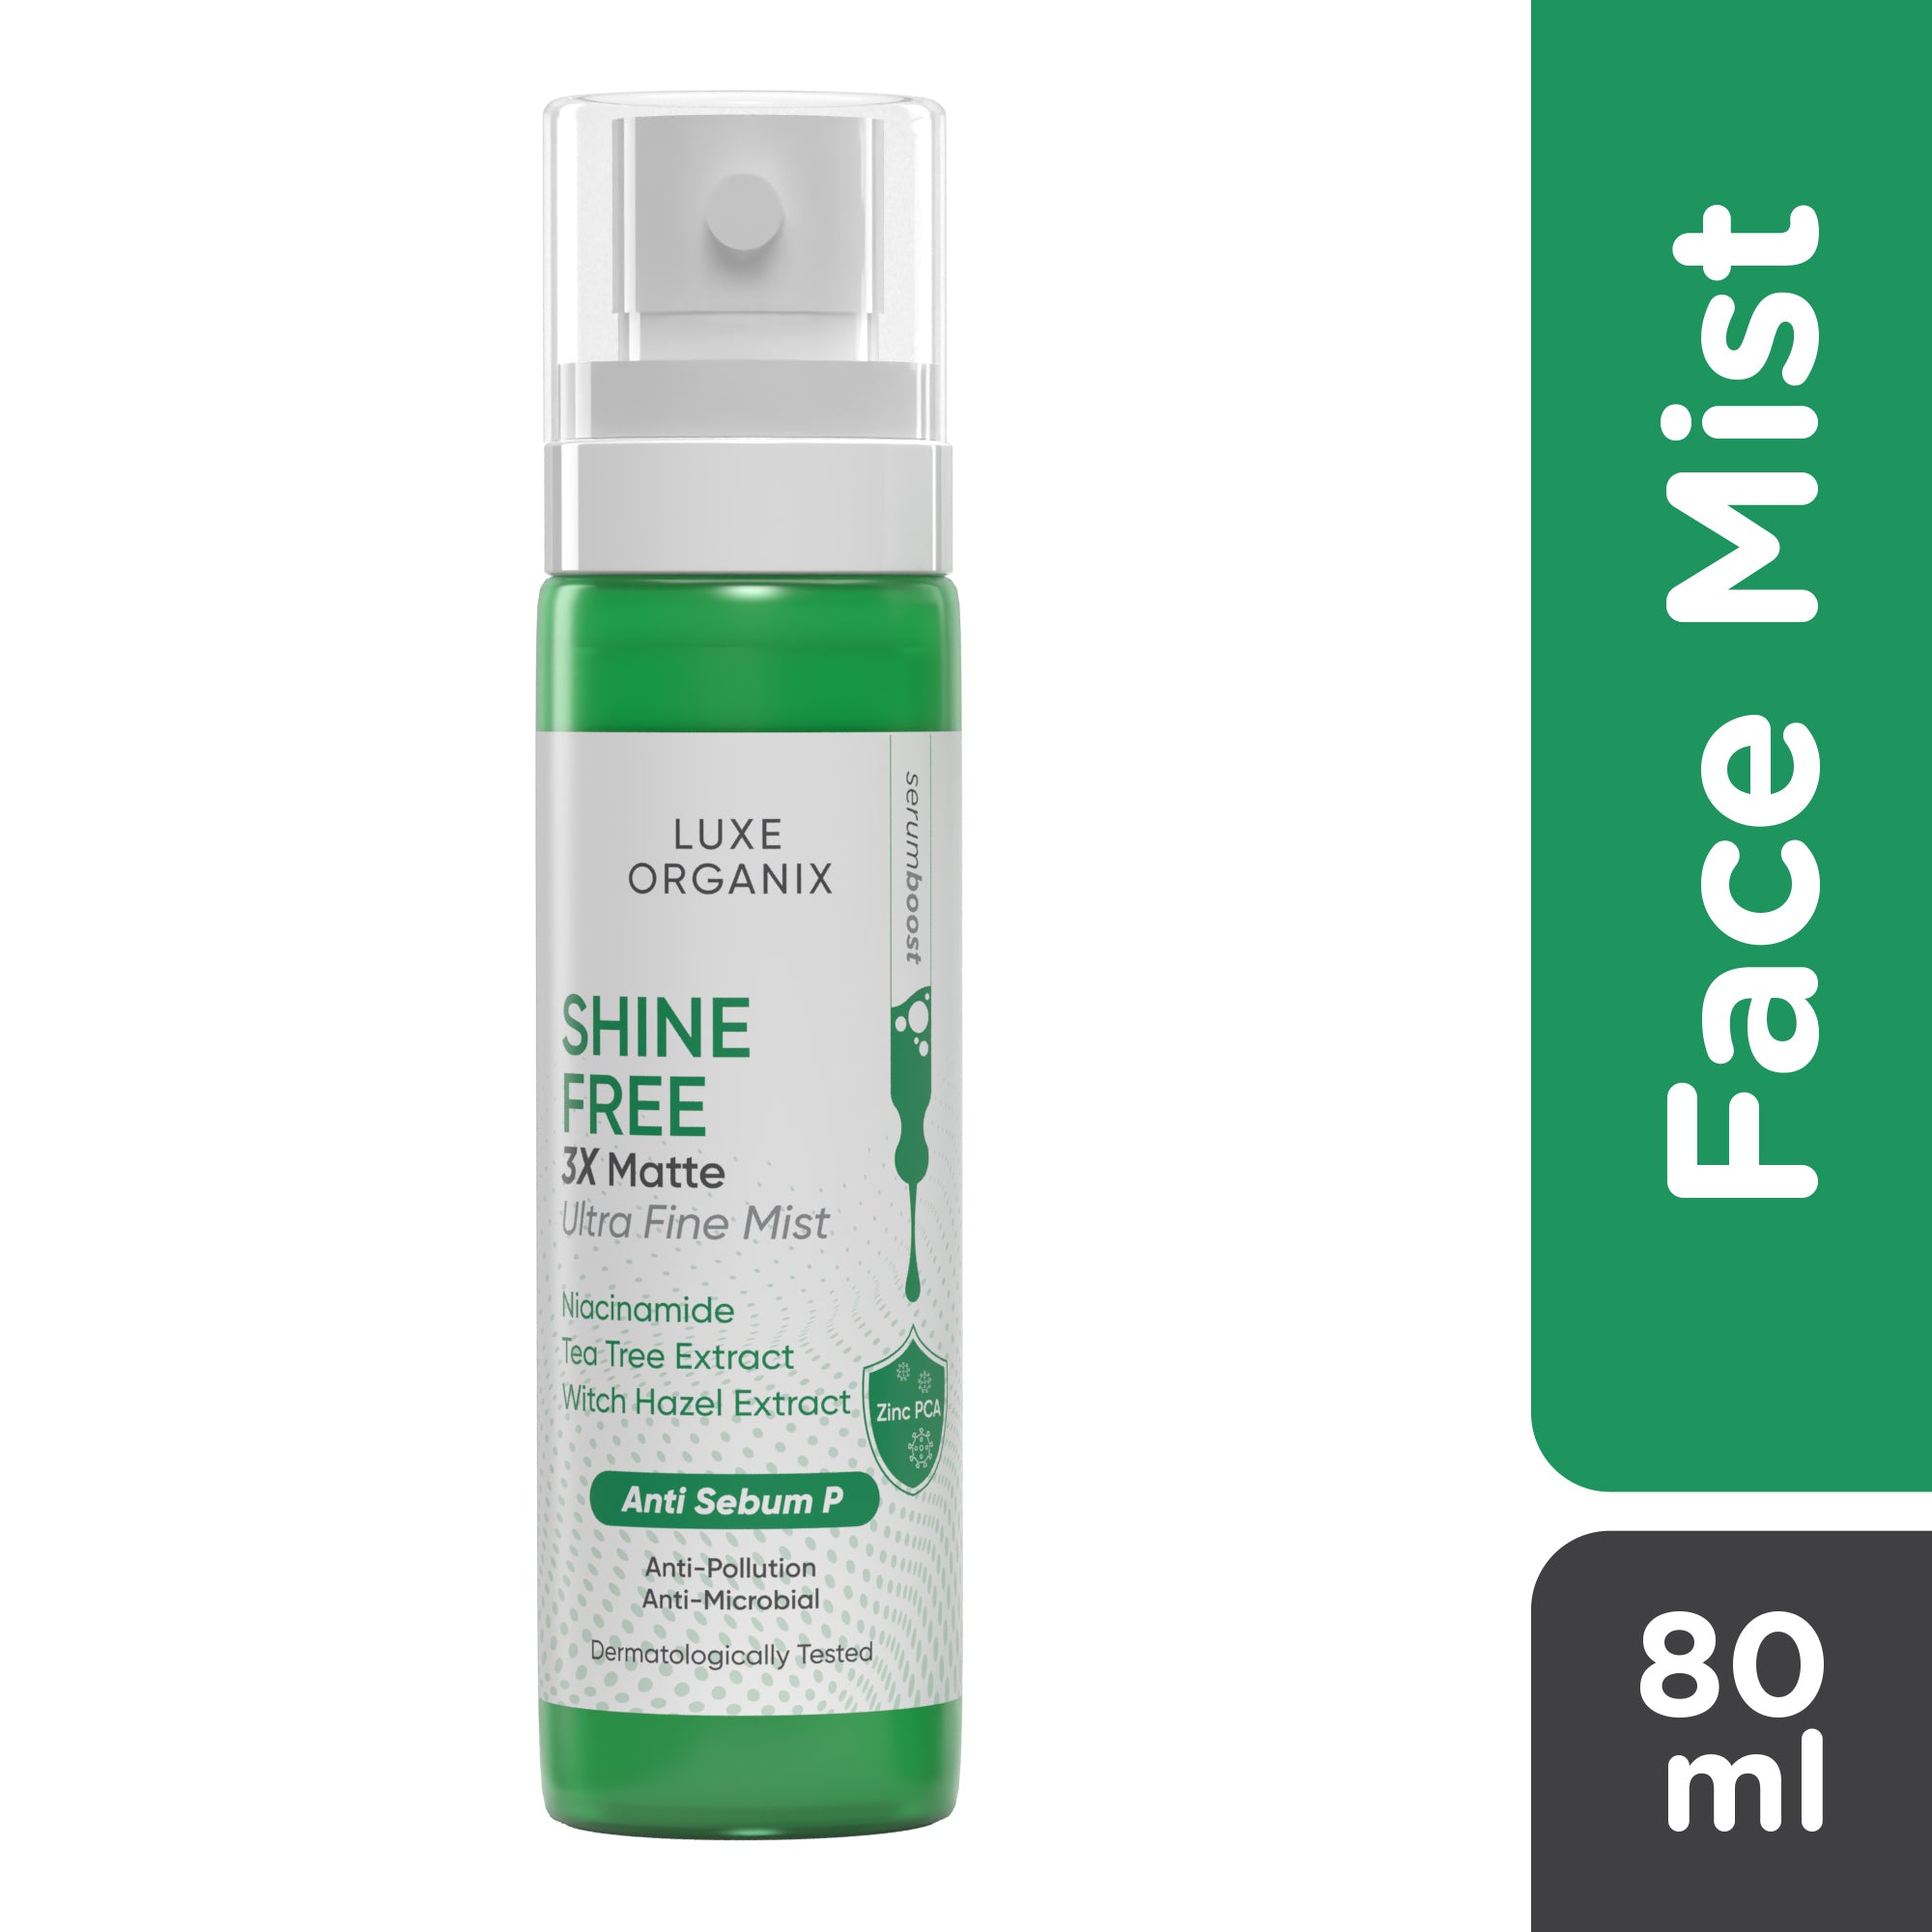 Shine Free 3x Matte Ultra Fine Mist 80ml